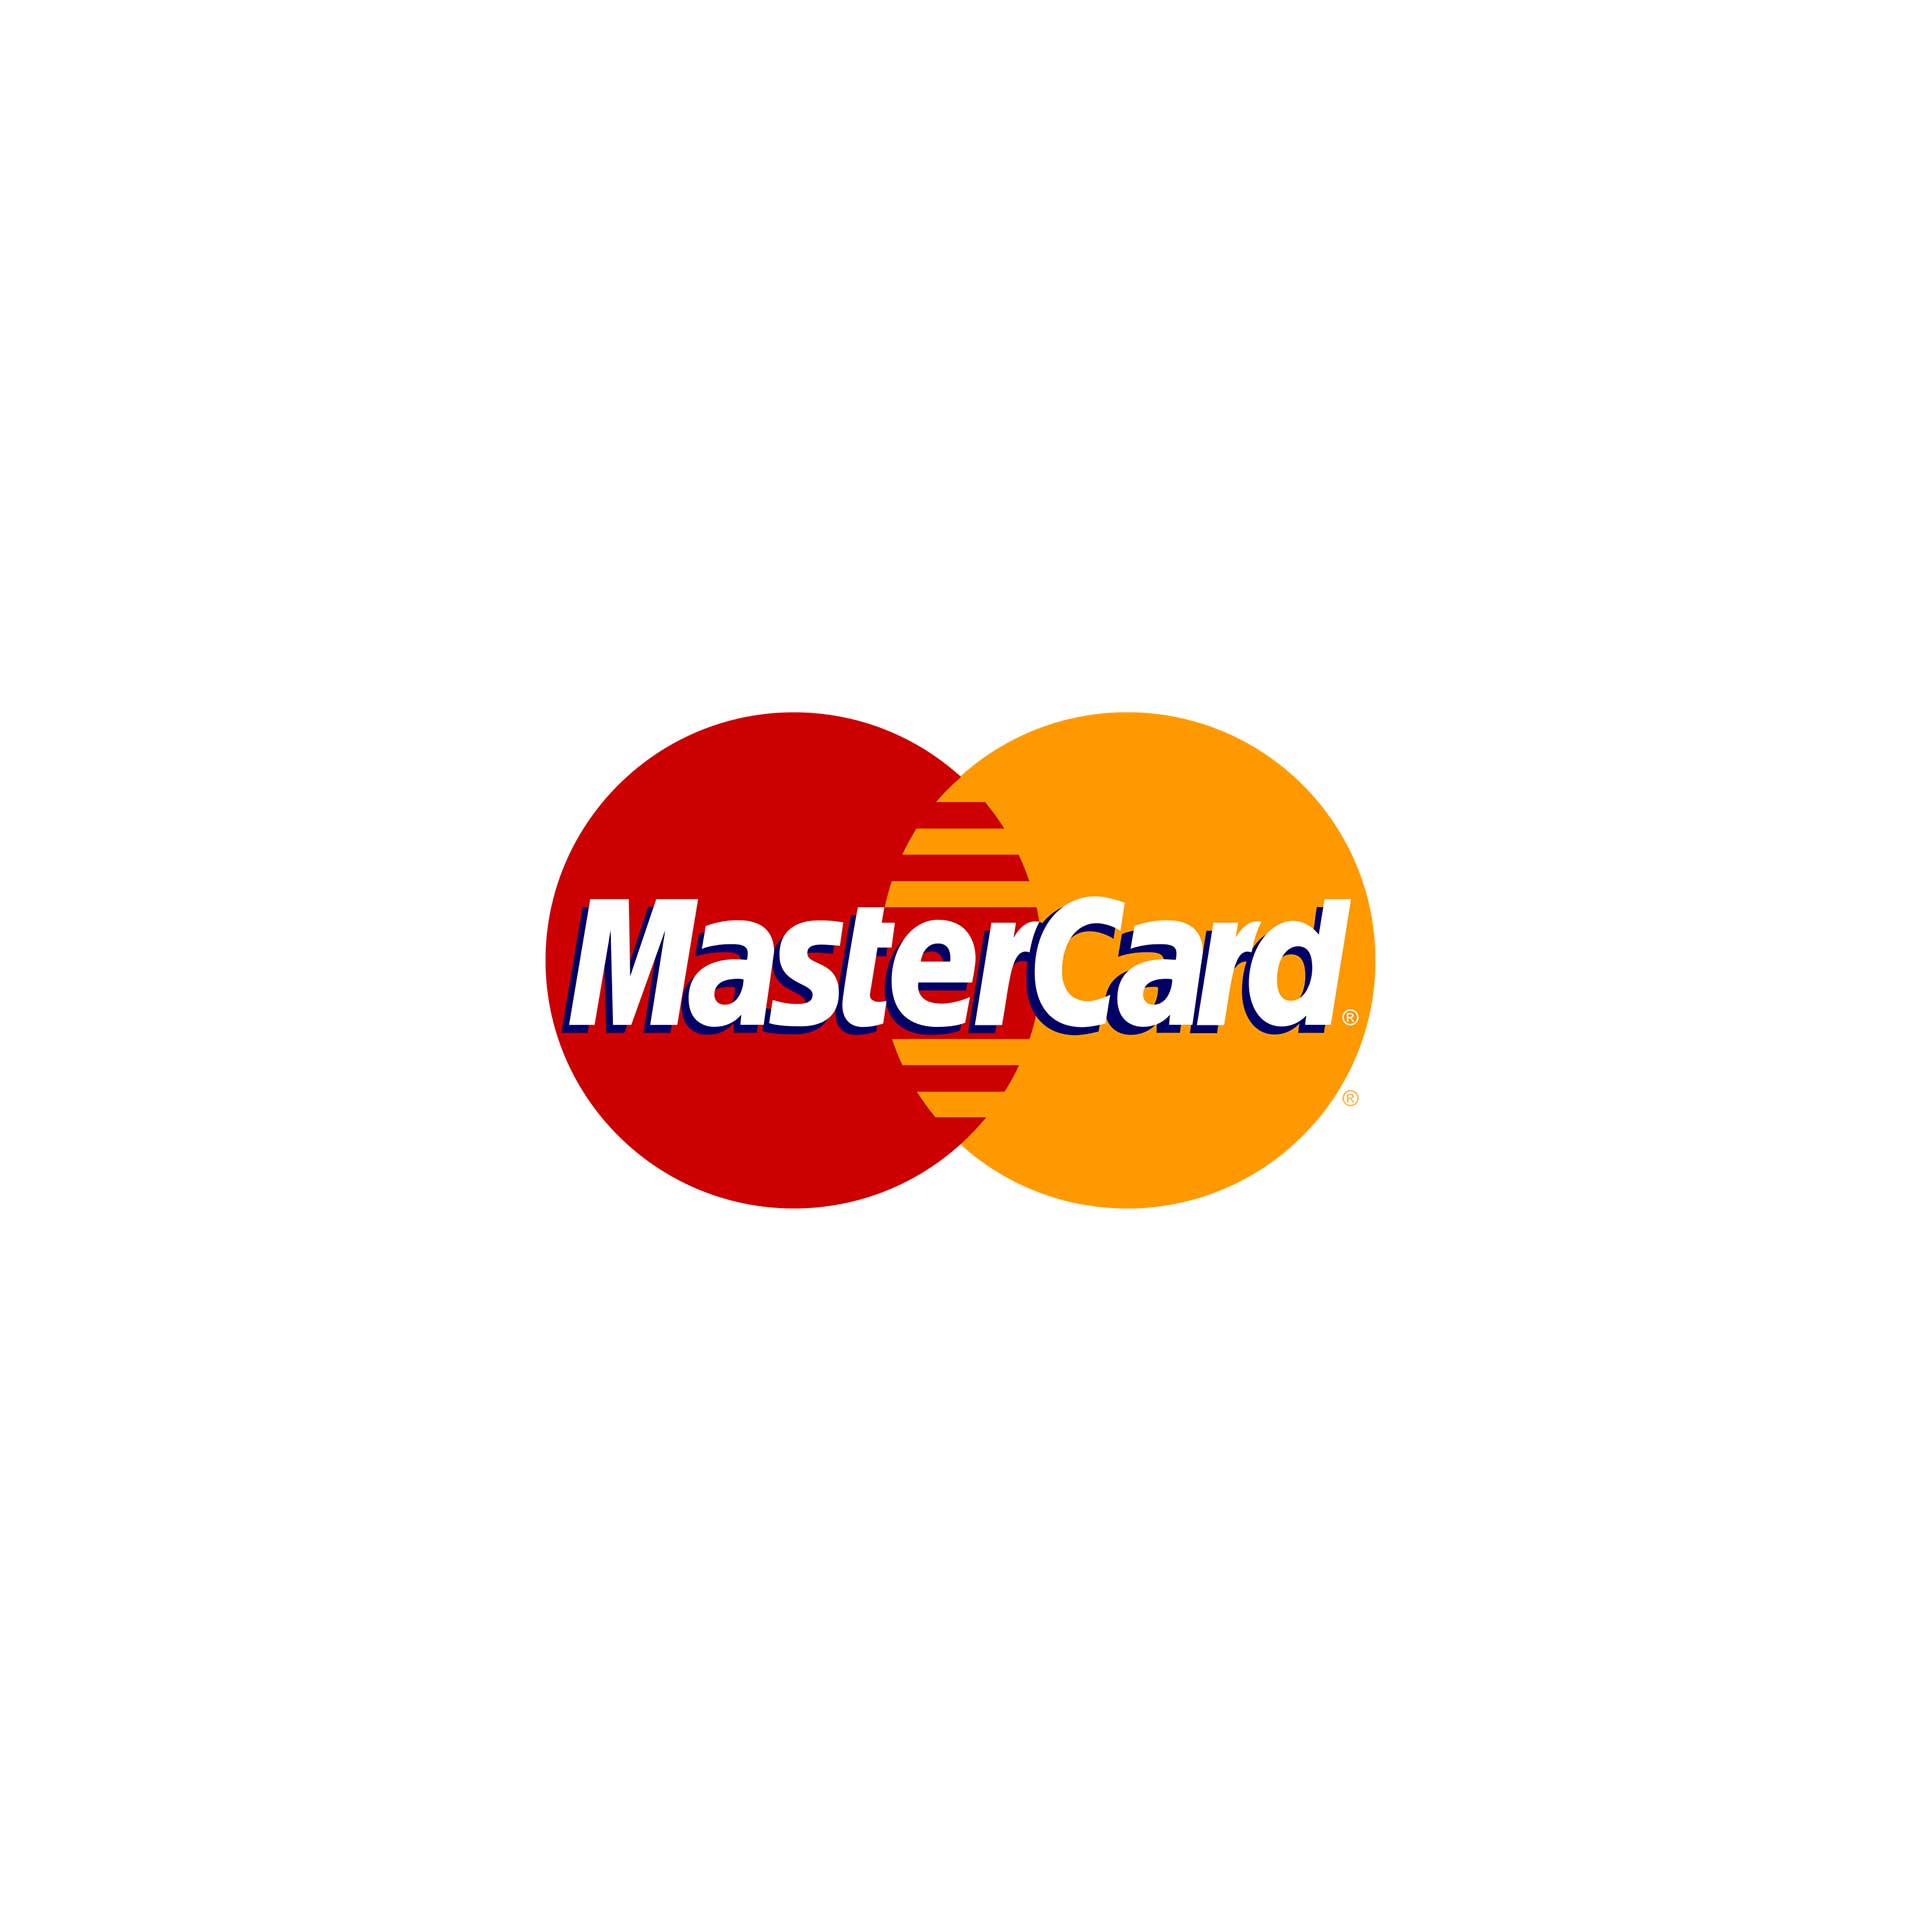 T me brand mastercard. Платежная система Мастеркард. Эмблема Мастеркард. Логотип платежной системы MASTERCARD. Мастеркард новый логотип.